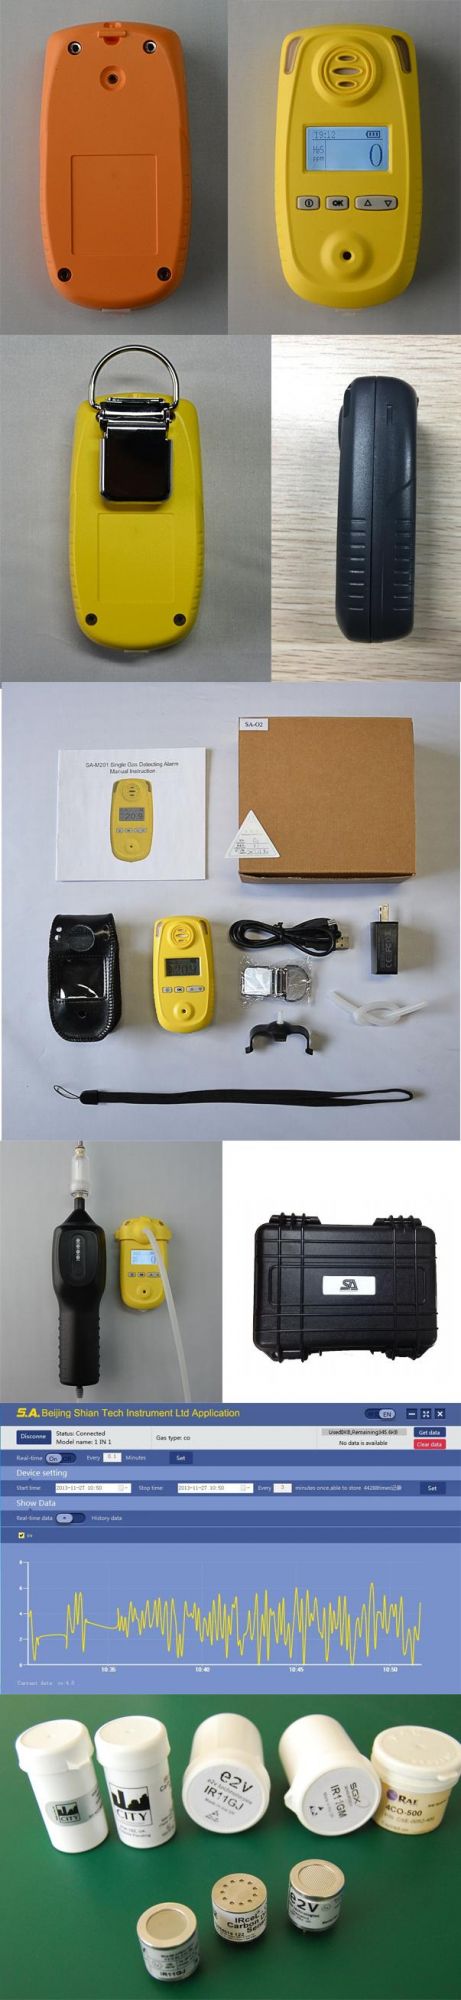 Handheld Toxic Nitrogen Dioxide Gas Monitor No2 Gas Detector